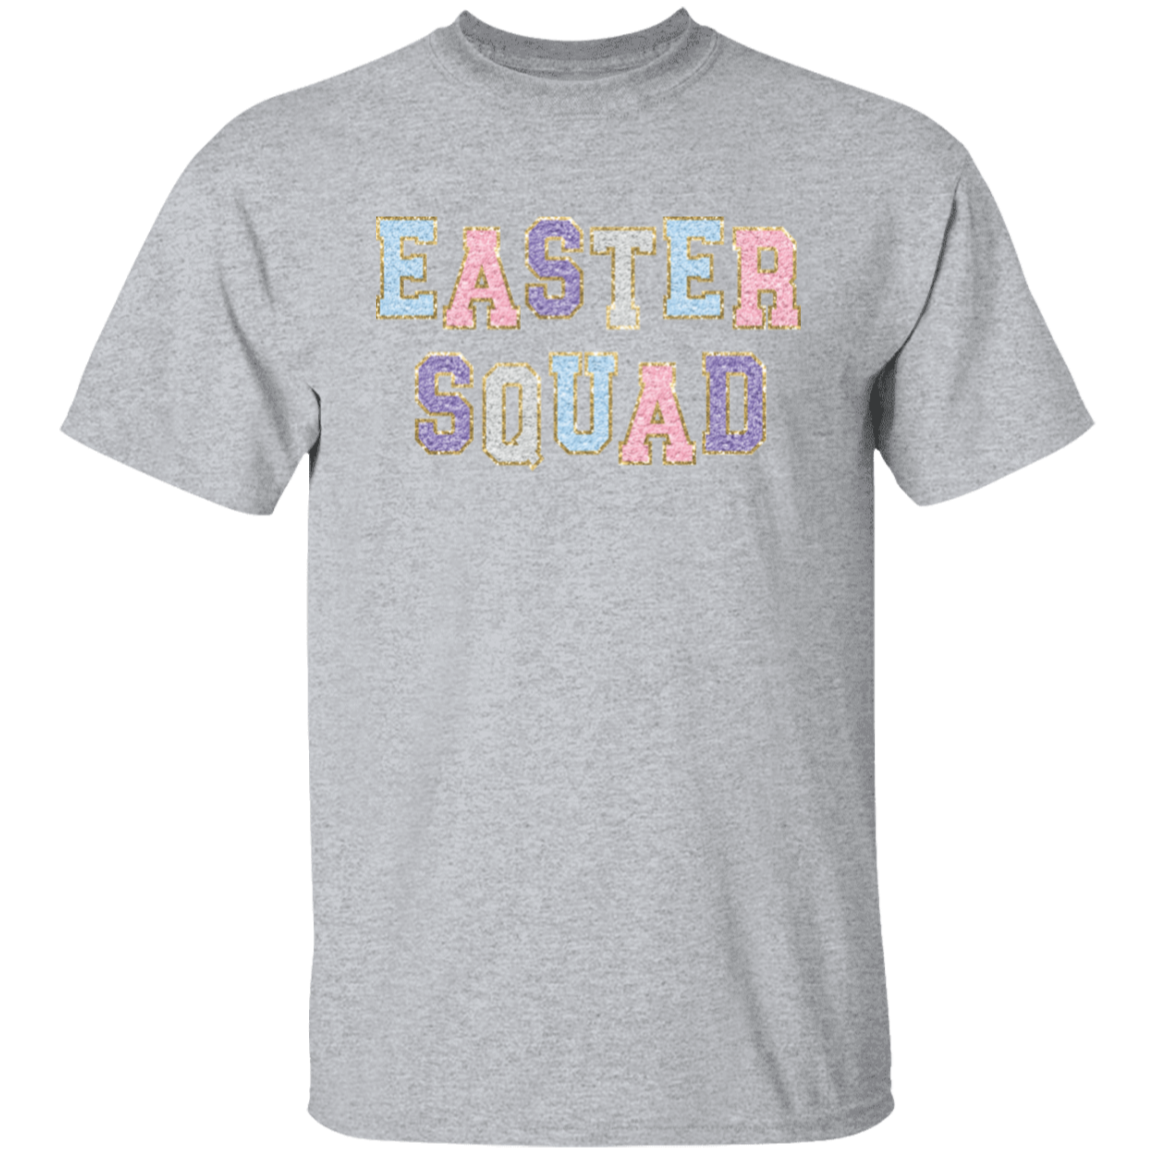 Easter Squad T-Shirt